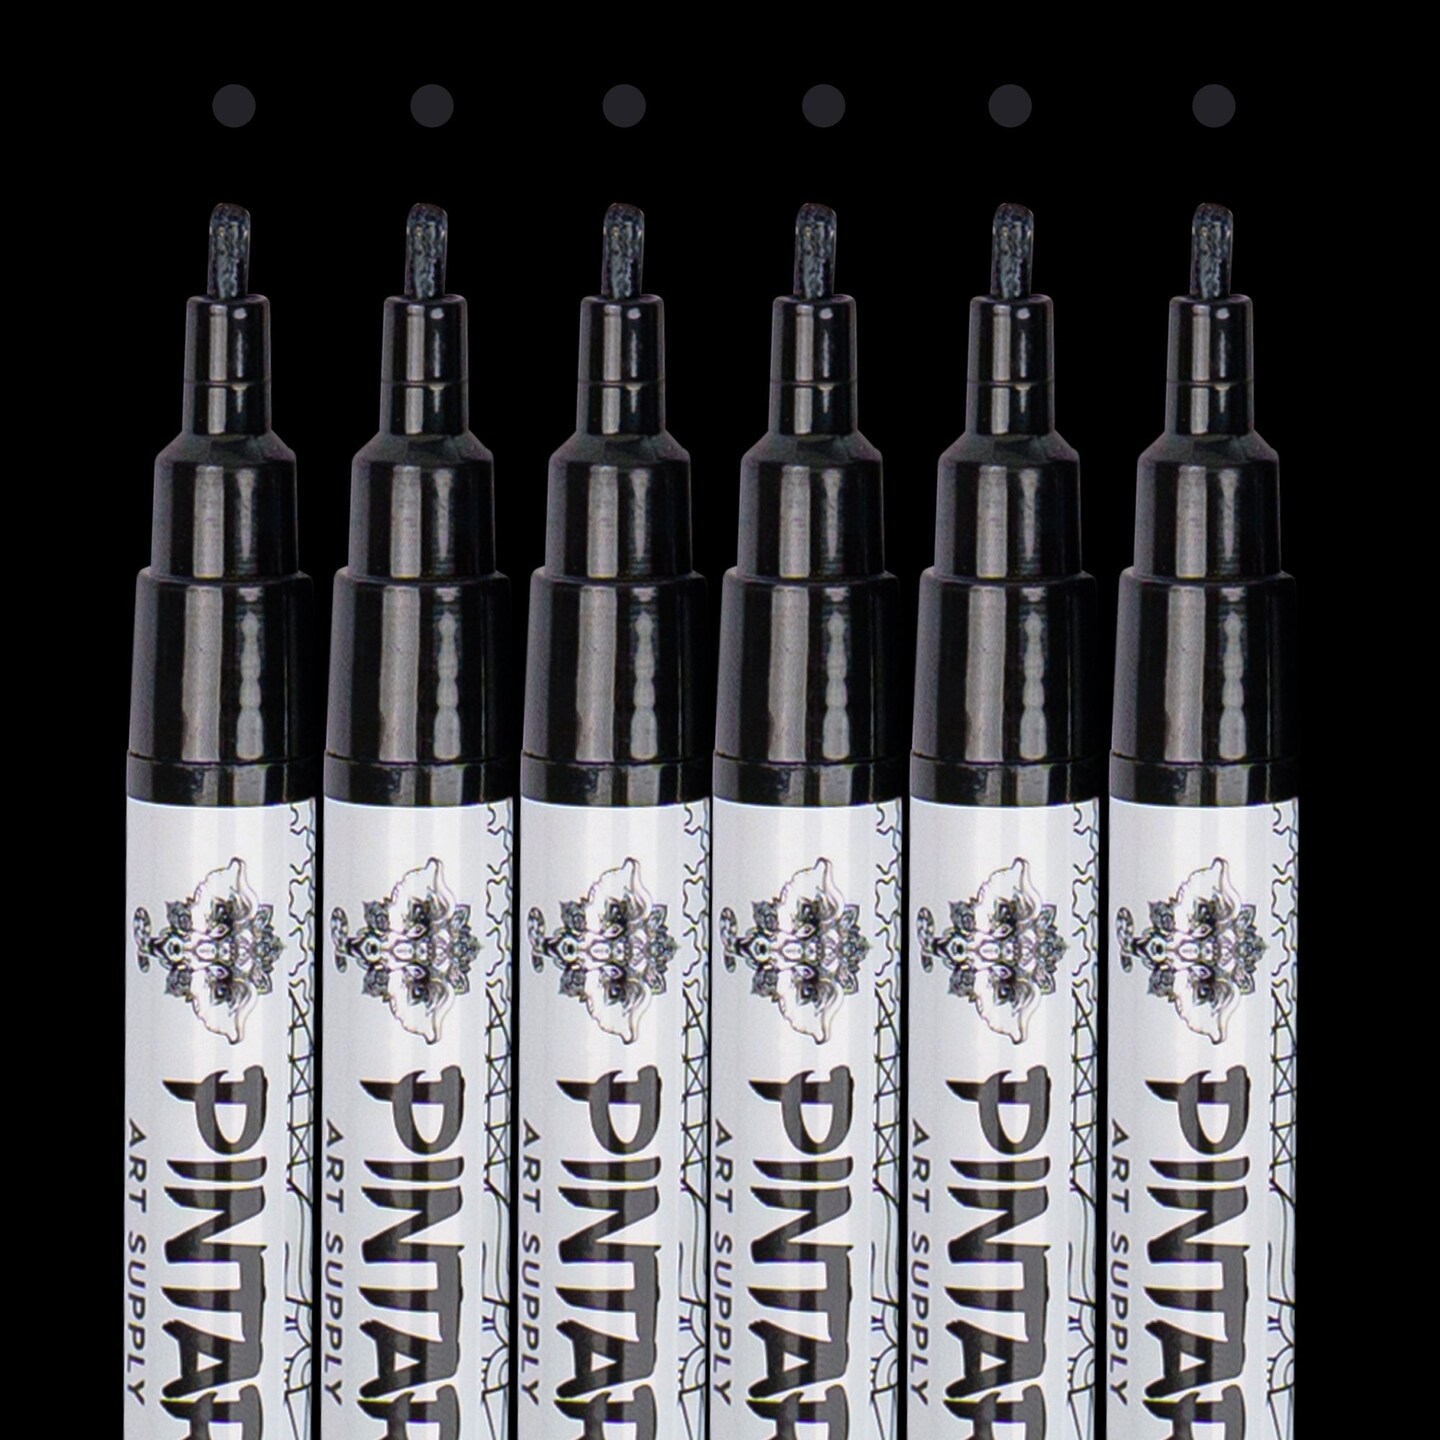 PINTAR Premium Acrylic Paint Pens - 1mm Fine Tip Pens For Rock Painting, Ceramic Glass, Wood, Paper, Fabric &#x26; Porcelain, Water Resistant Paint Set, Surface Pen, Craft Supplies, DIY Project (6 Black)